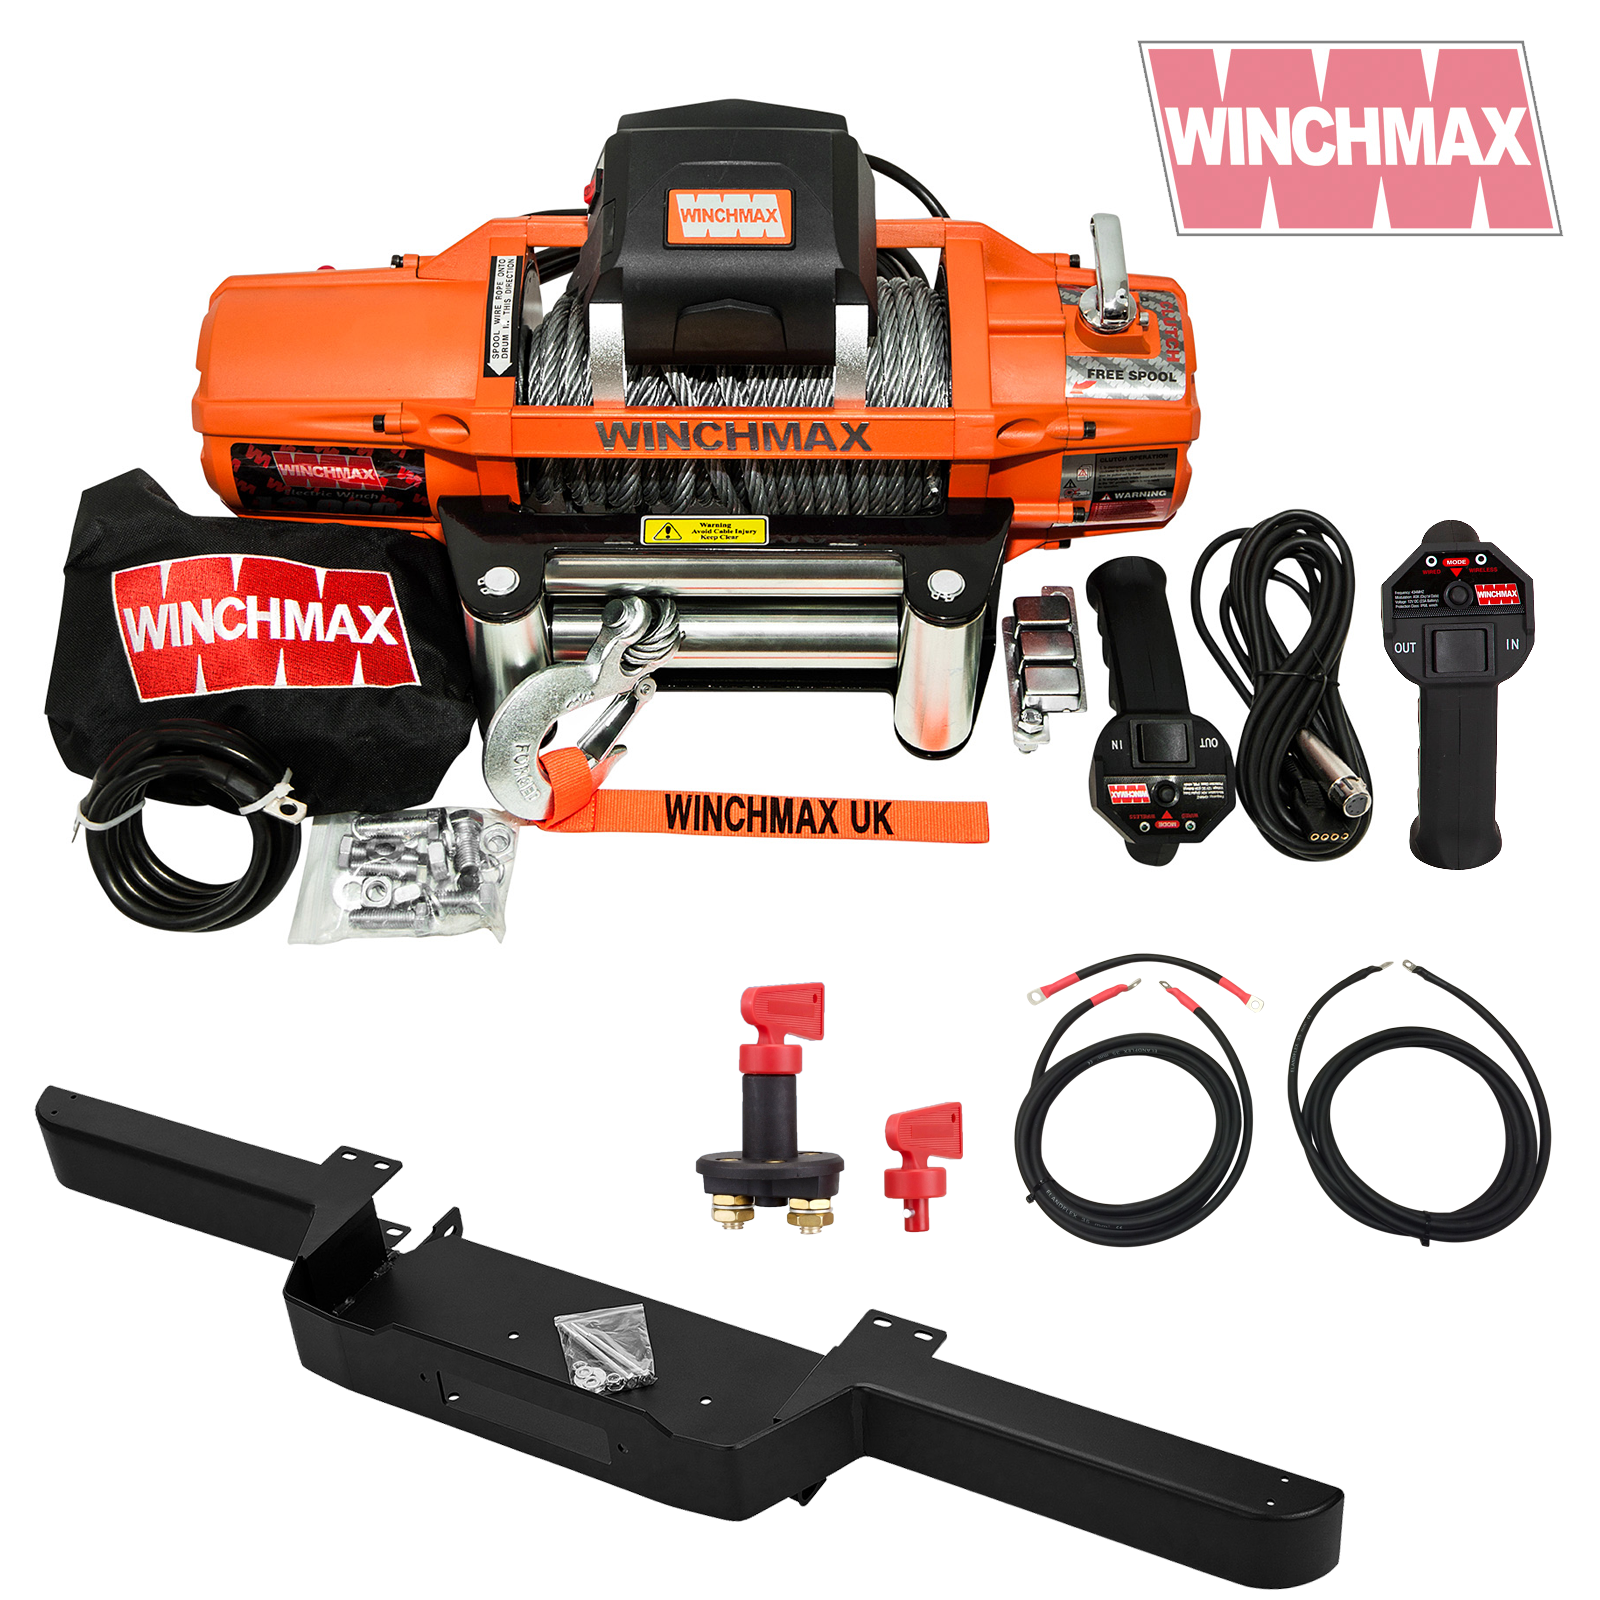 WINCHMAX 13500lb SL Winch. Steel Rope, Defender Bumper and Remote Controls